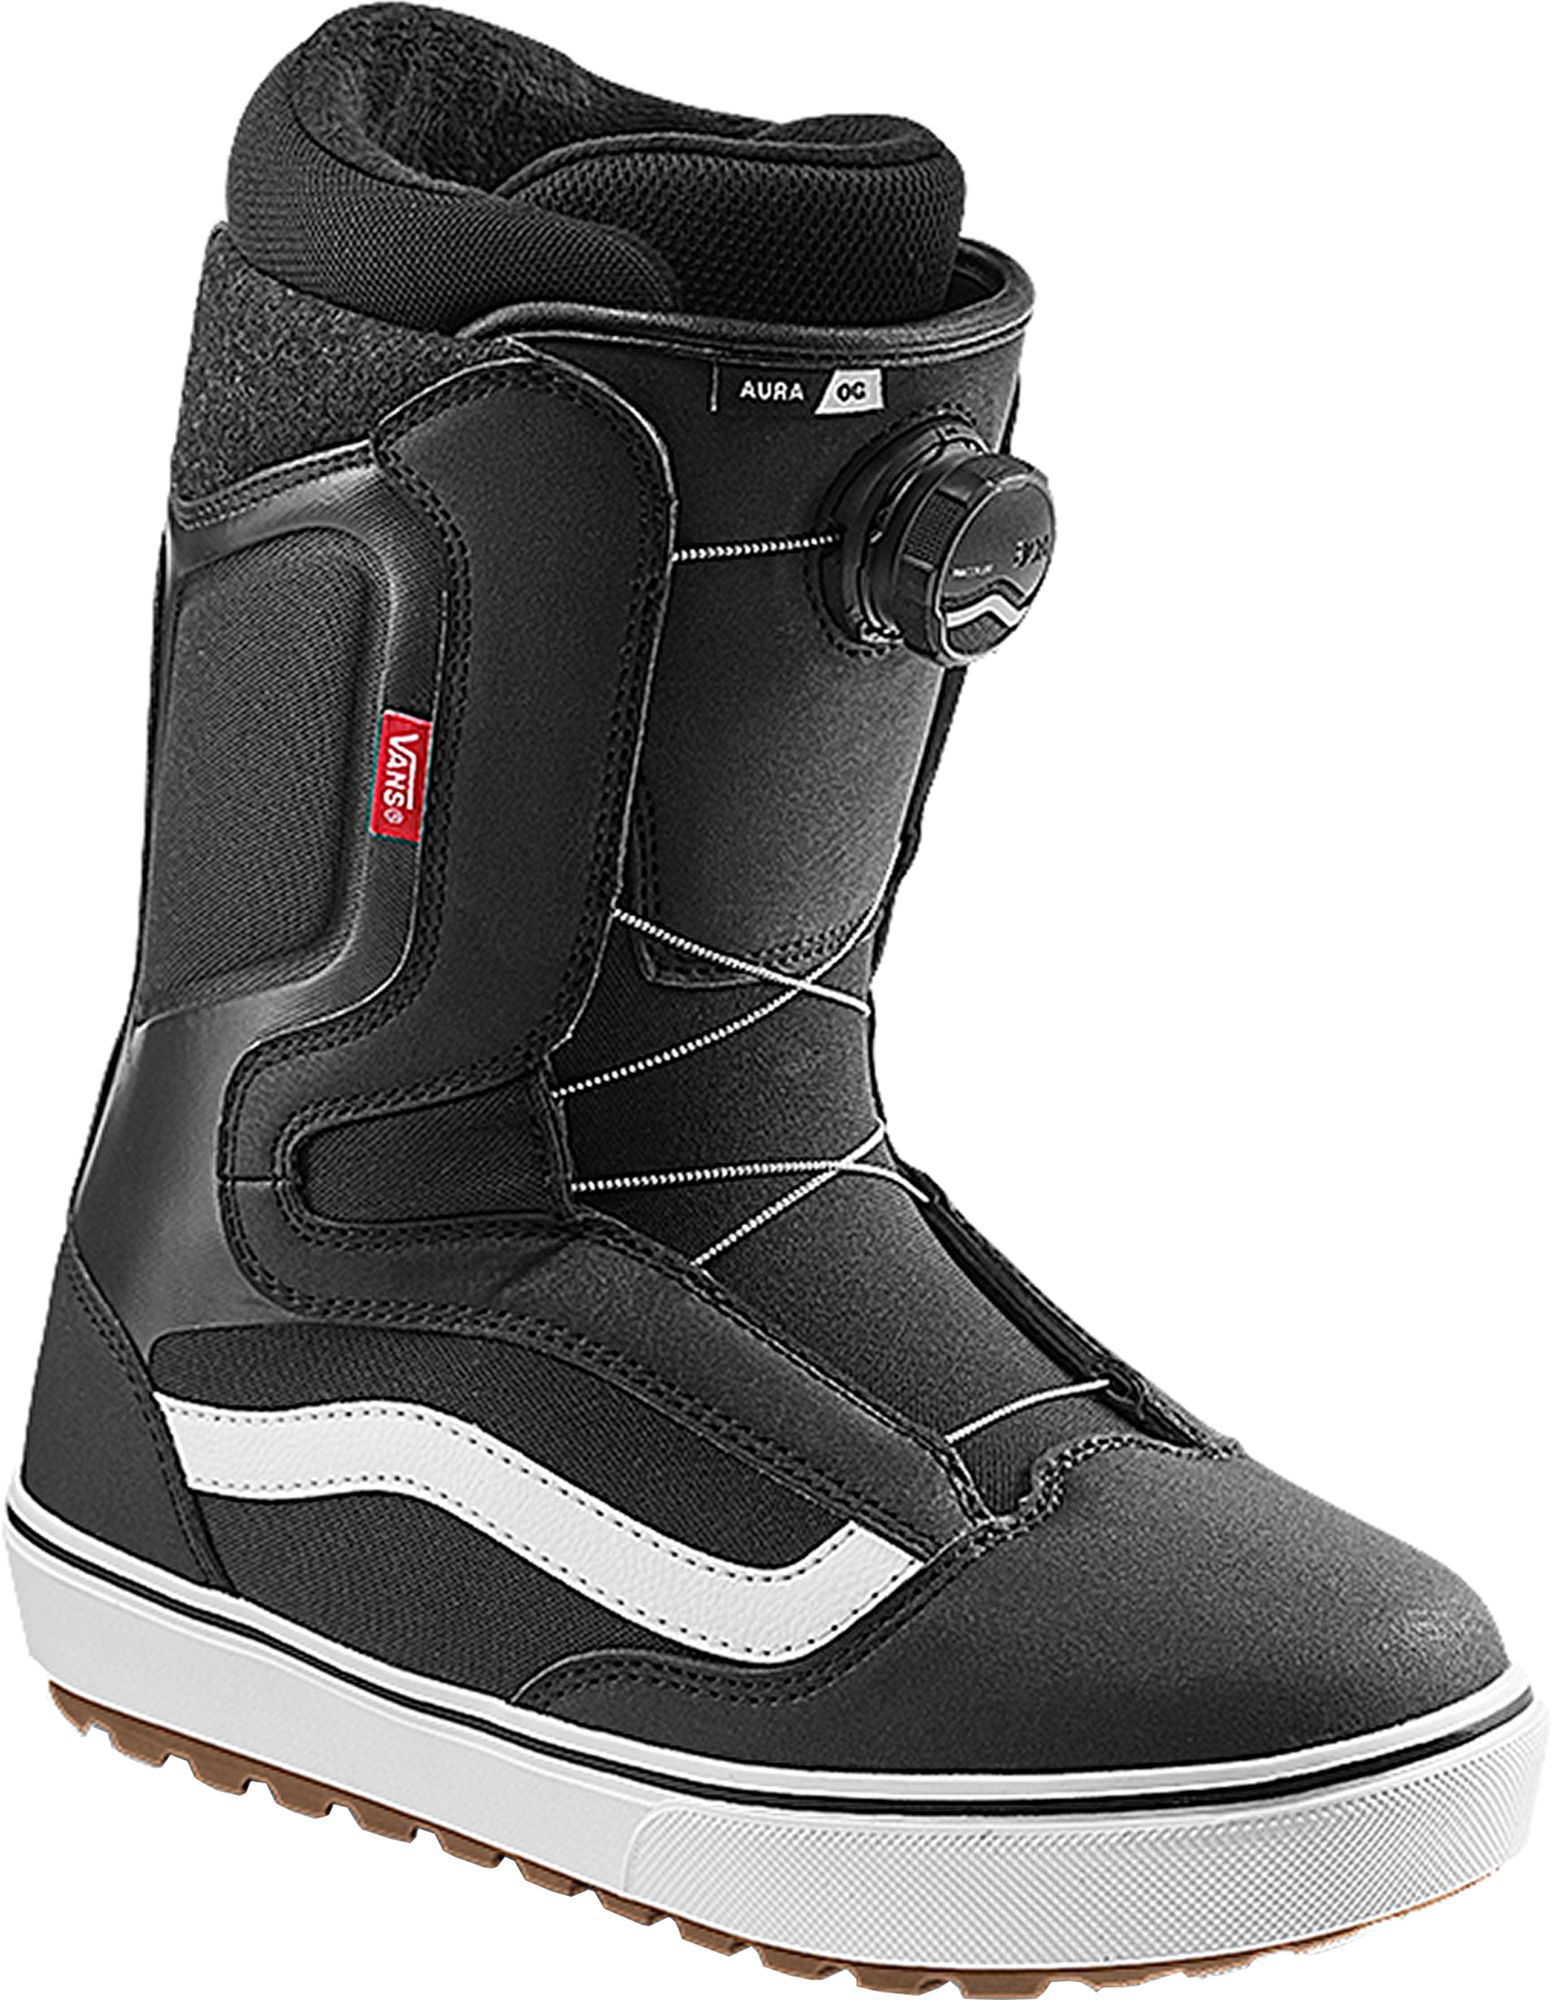 Photos - Ski Boots Vans '23-'24 Encore OG Women's Snowboarding Boots, Size 9.5, Black/White 2 